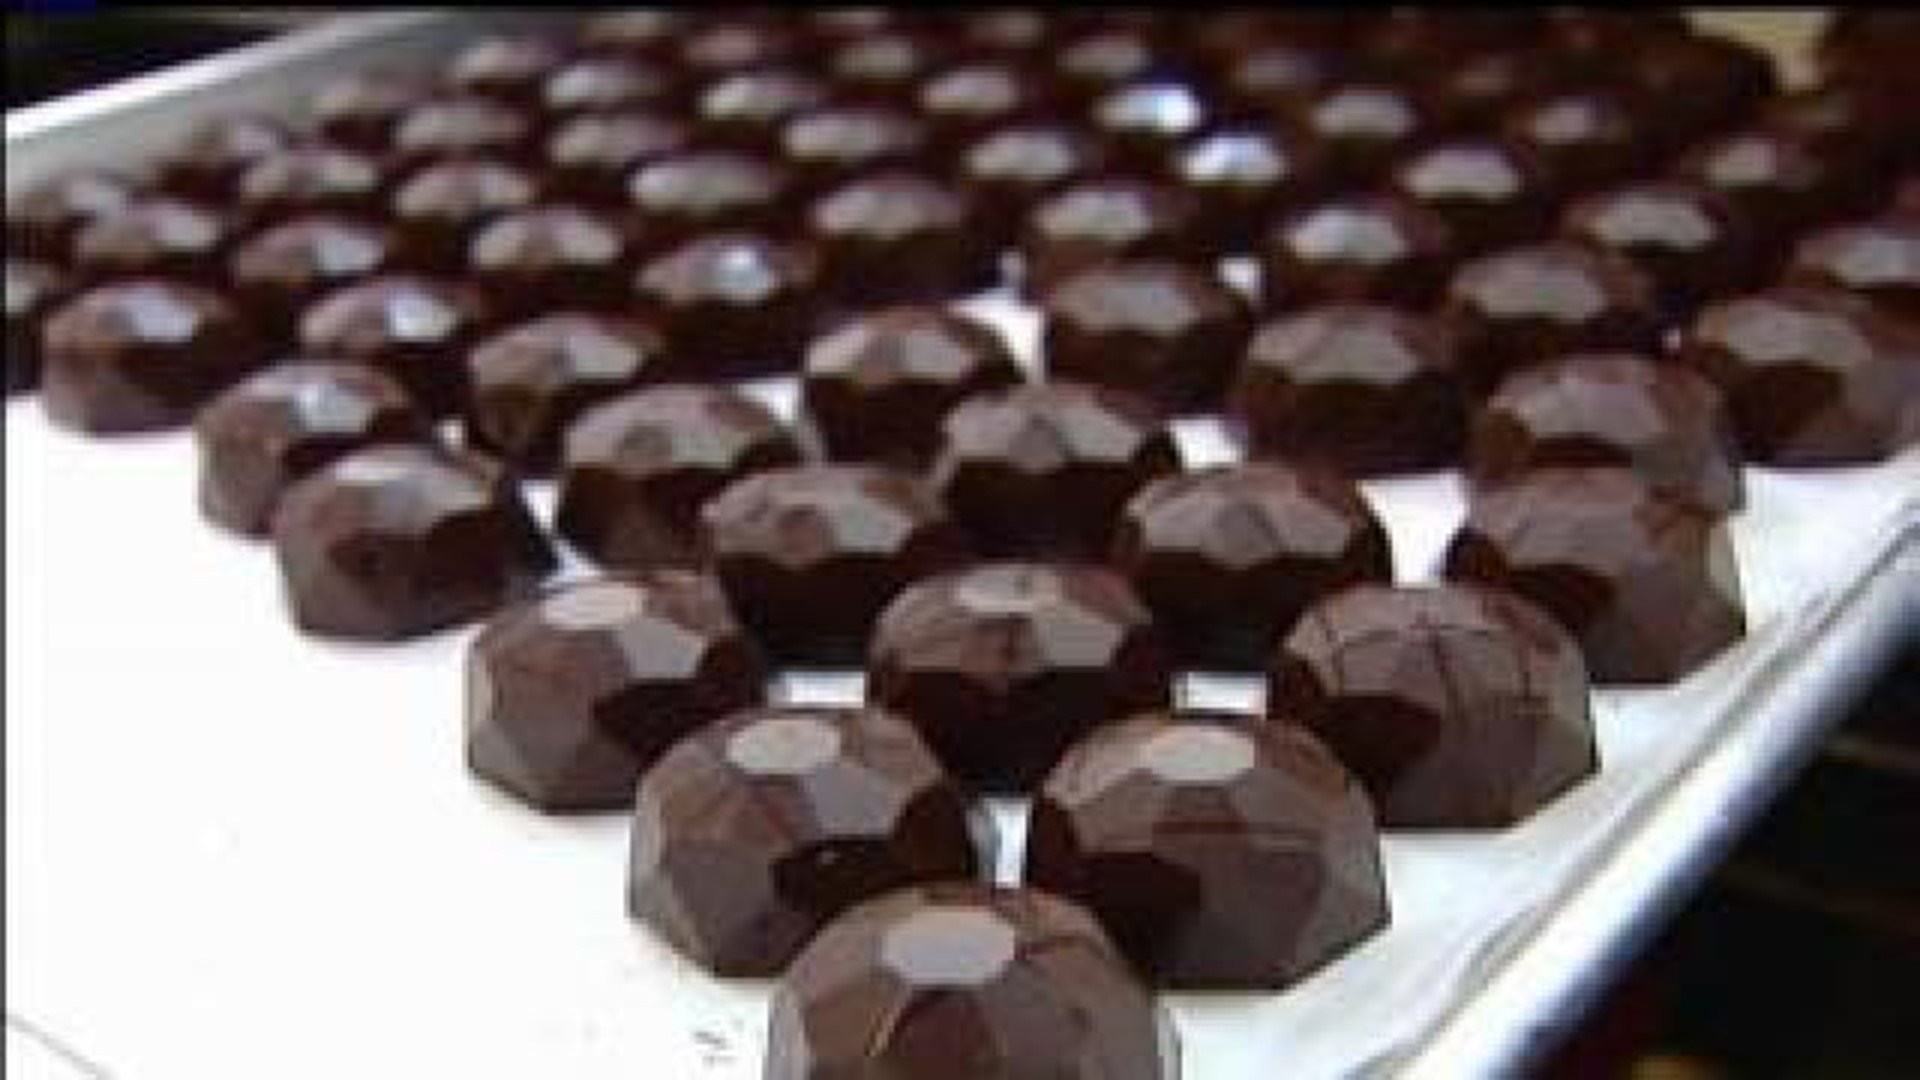 Chocolate prices rise